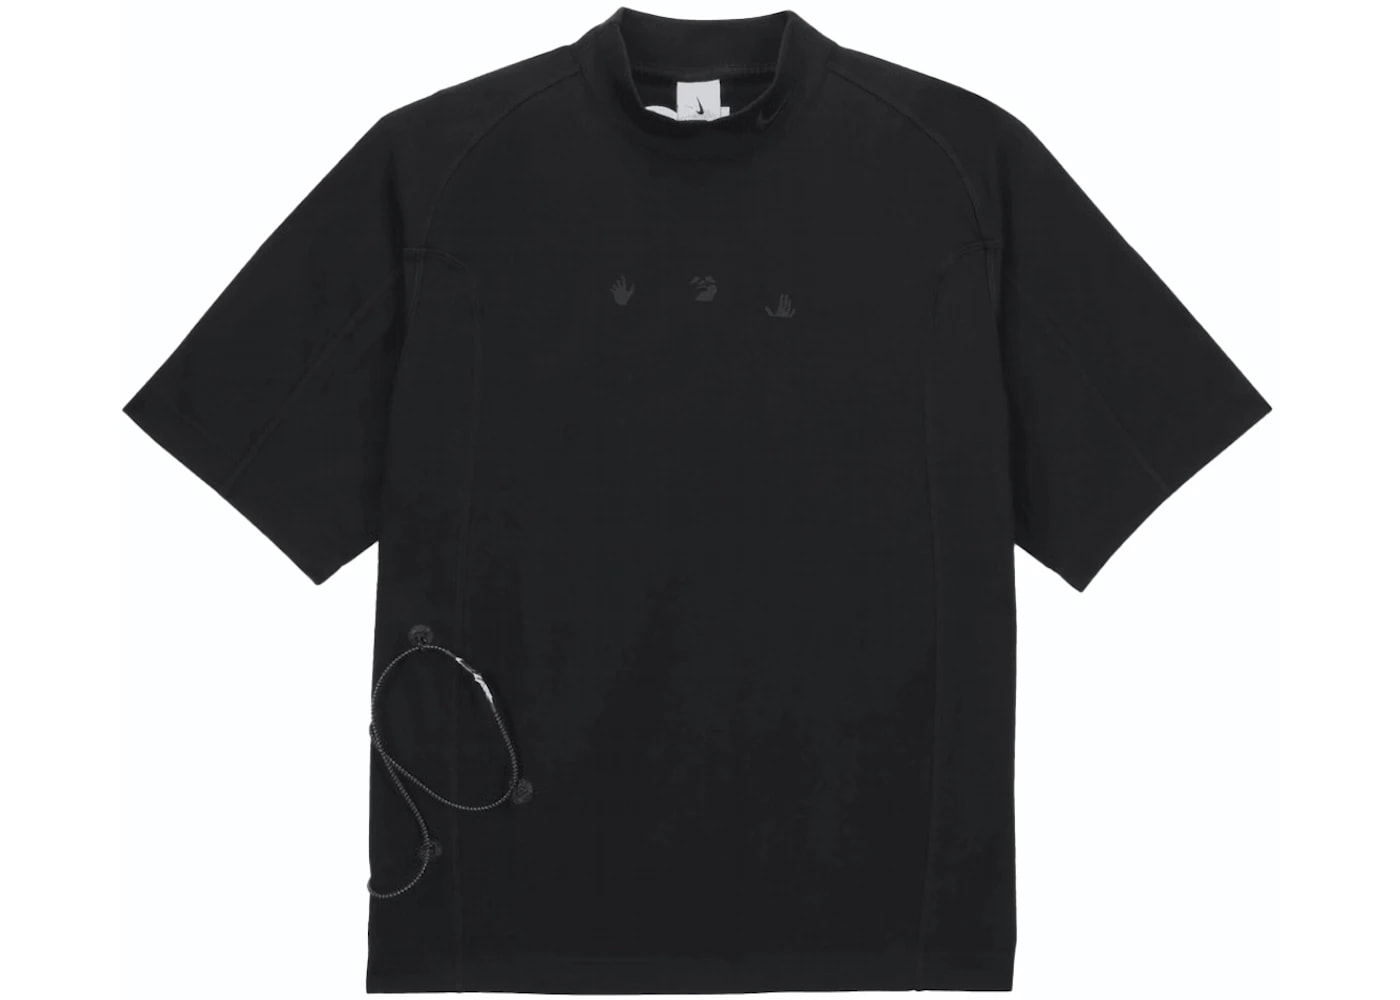 Nike x Off-White Short Sleeve Top Black